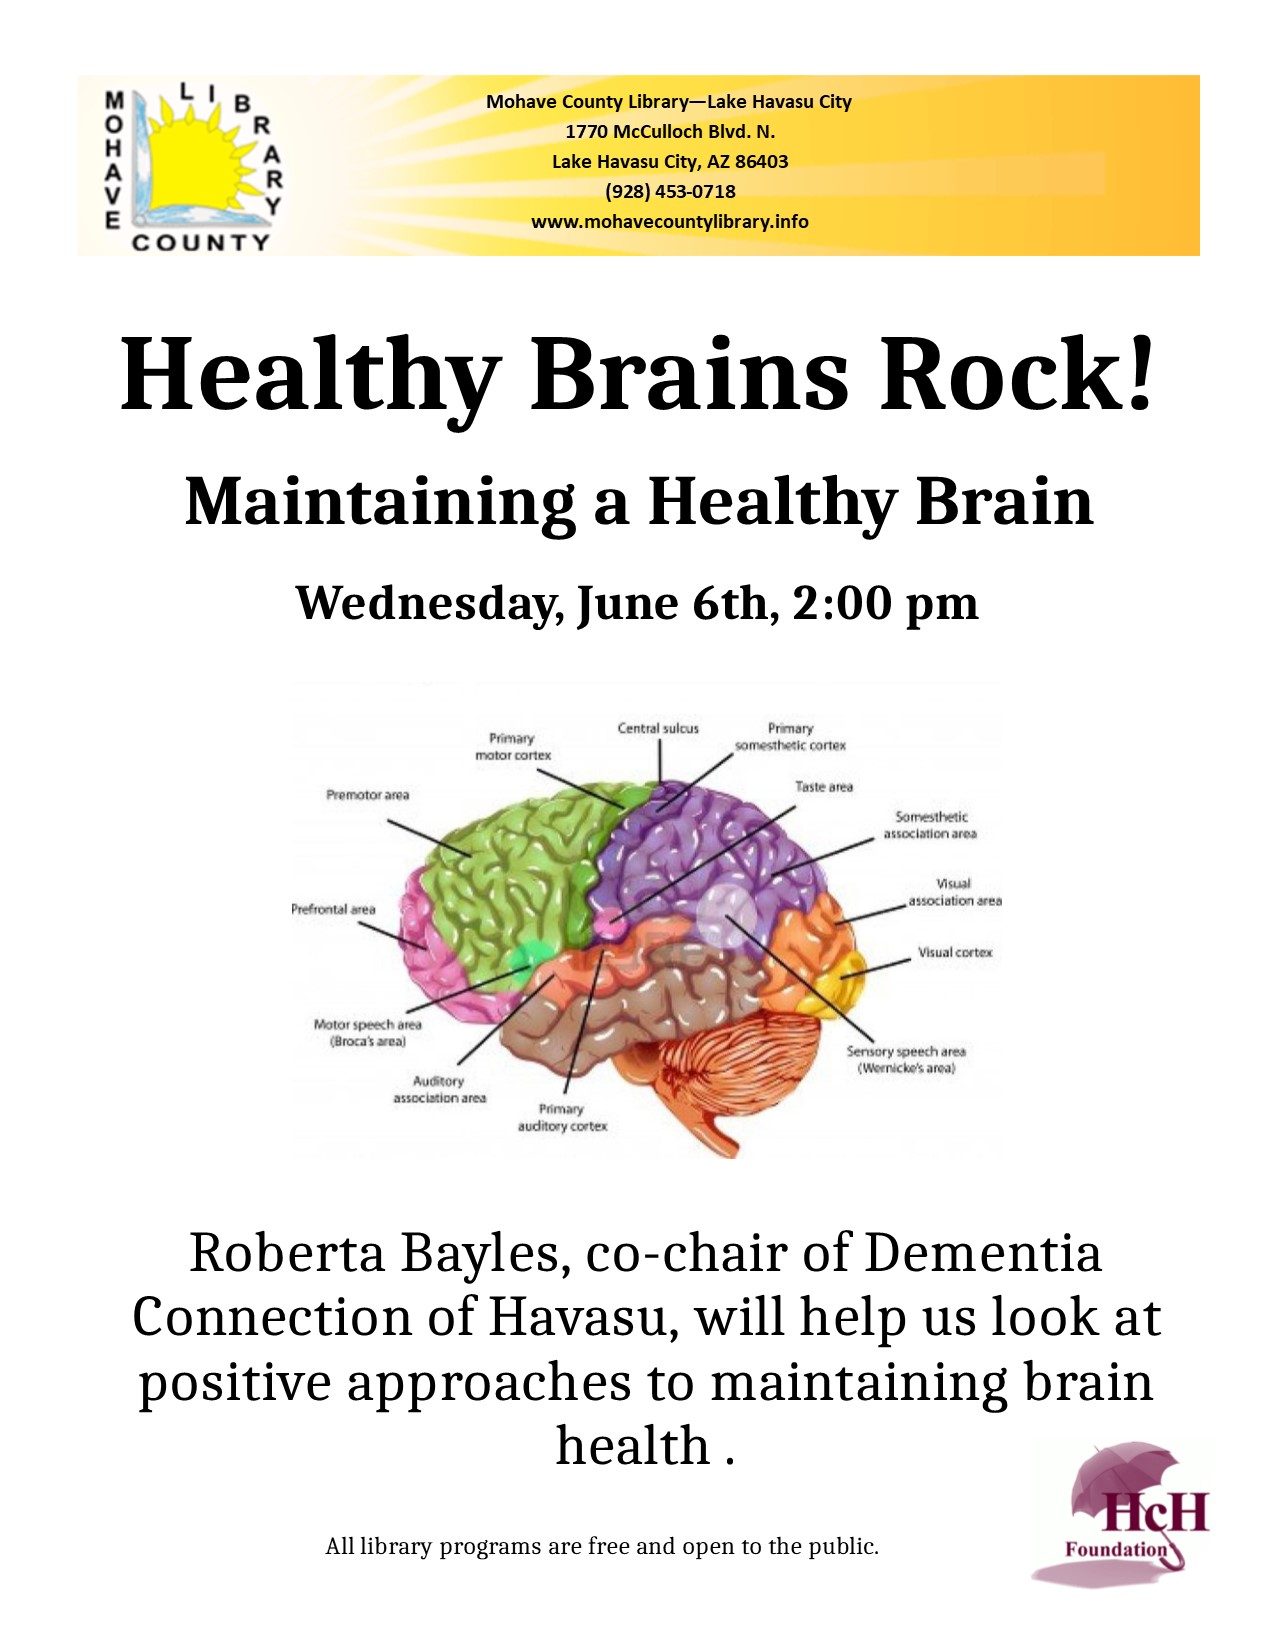 Healthy brains rock!: maintaining a healthy brain